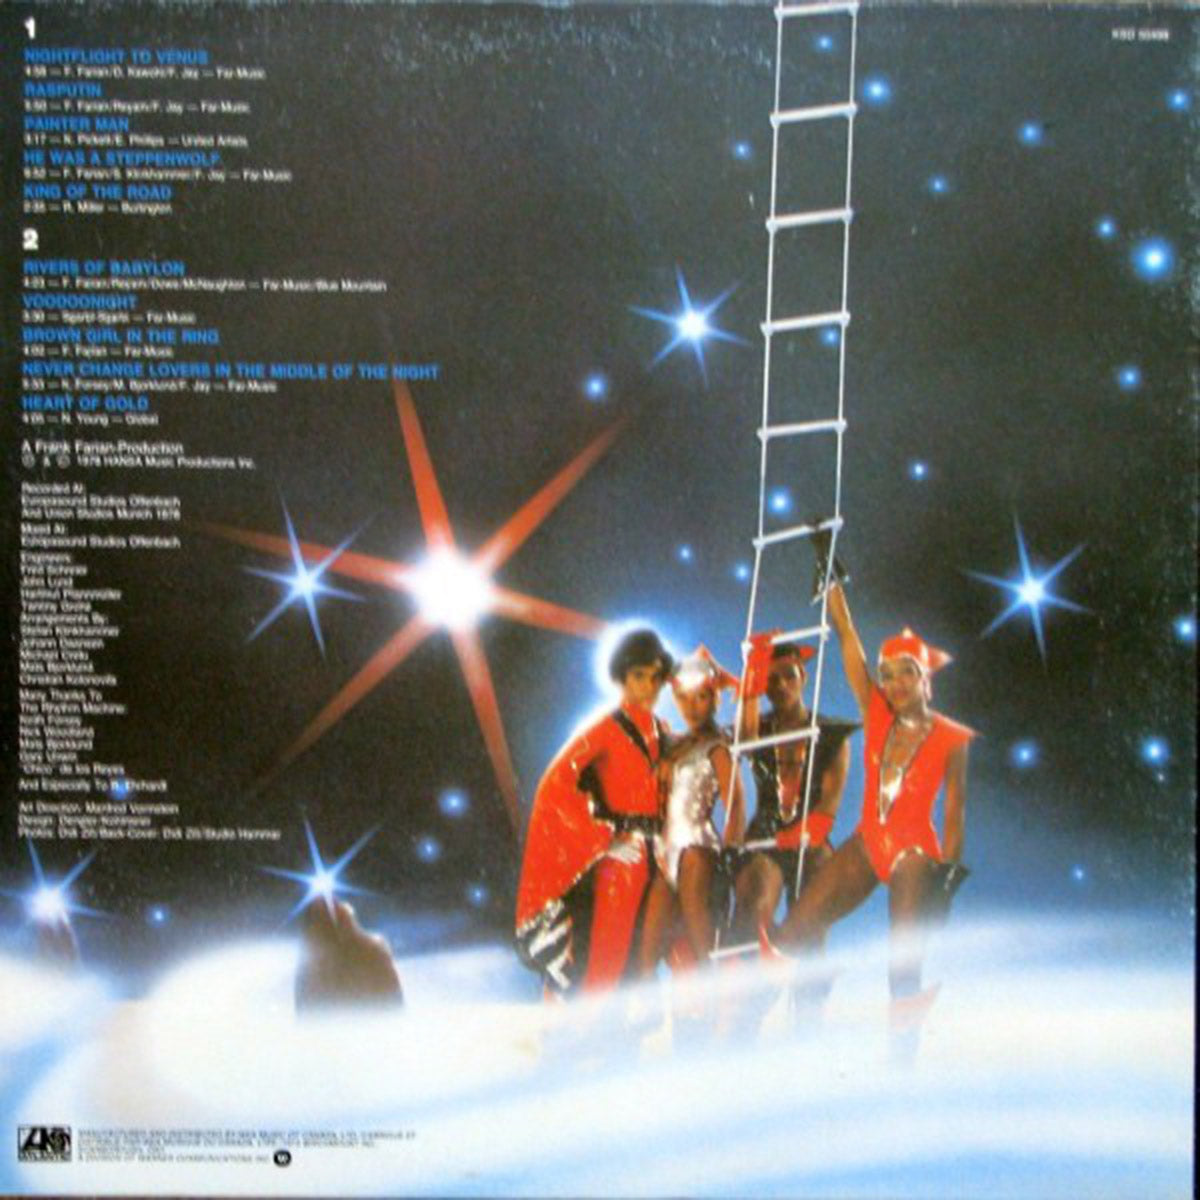 Boney M ‎– Nightflight To Venus - 1978